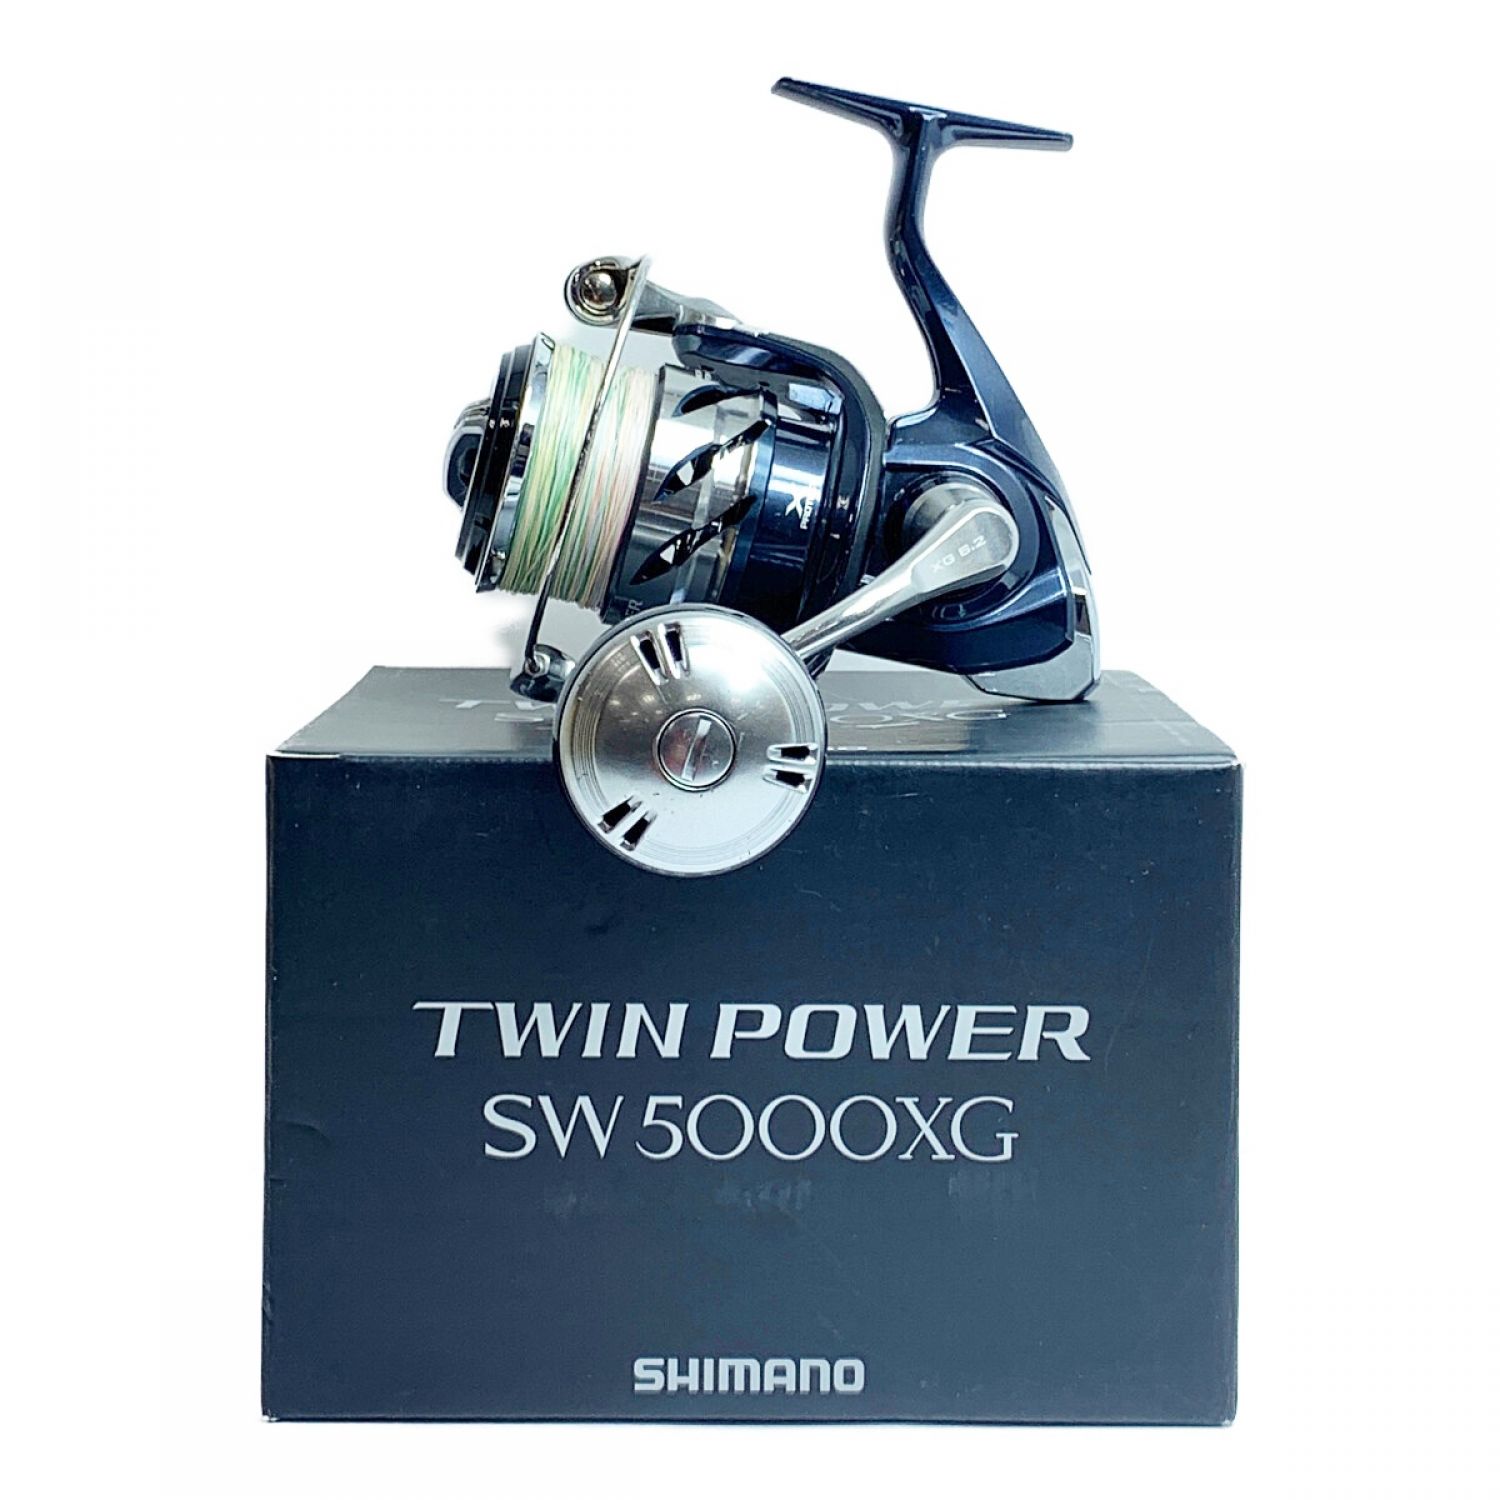 SHIMANO シマノ ツインパワー SW 5000XG TWINPOWER